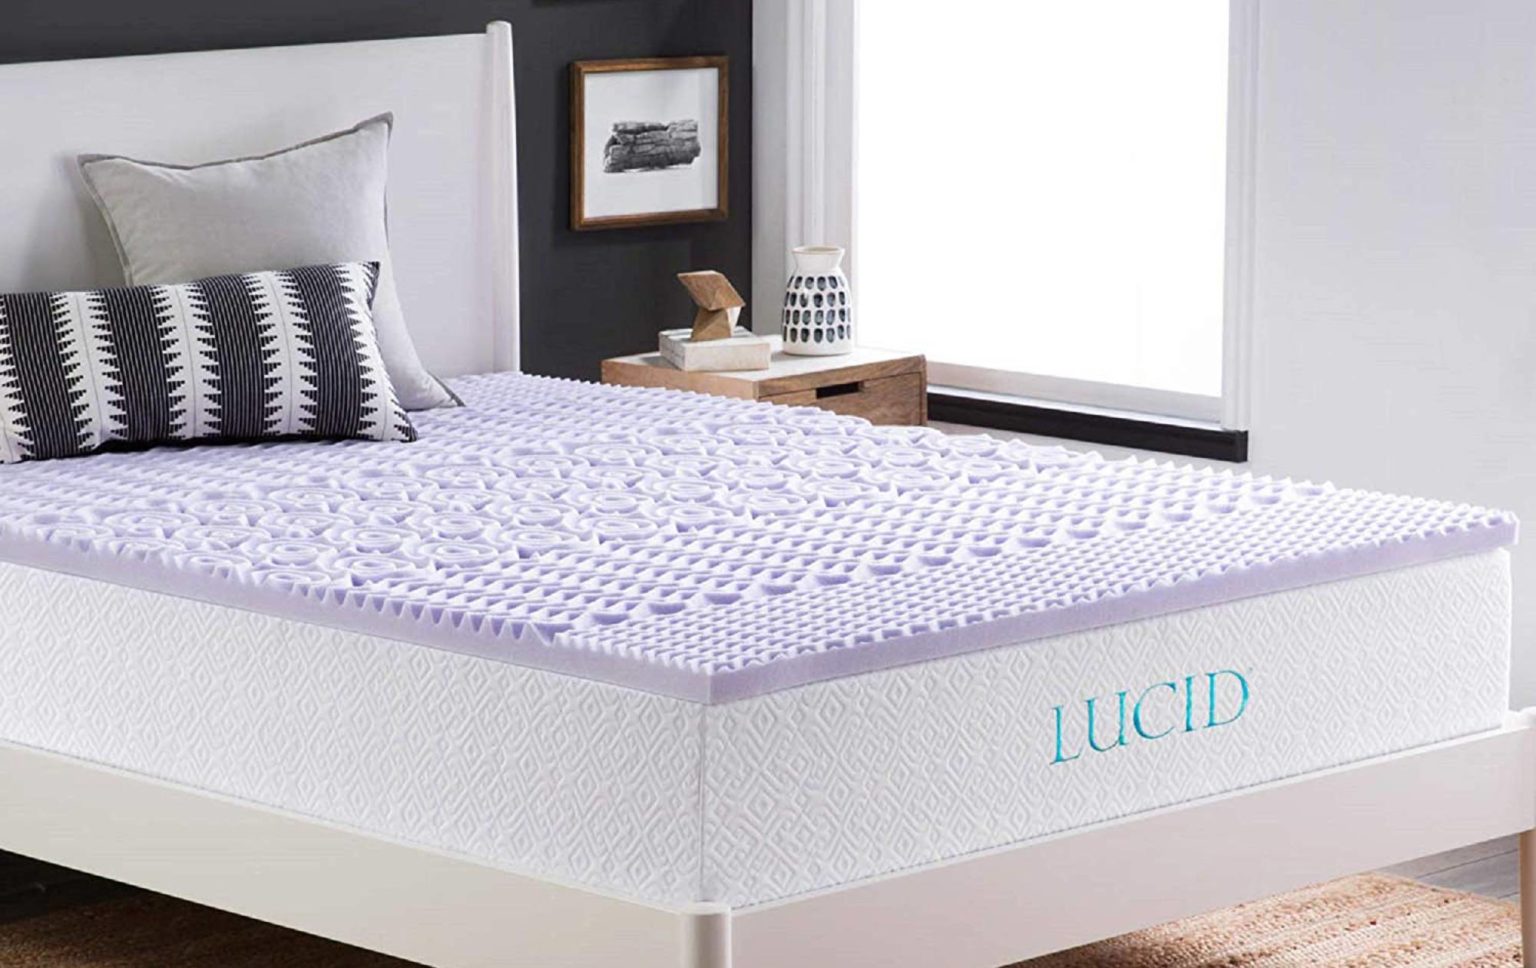 lucid mattress topper comparison